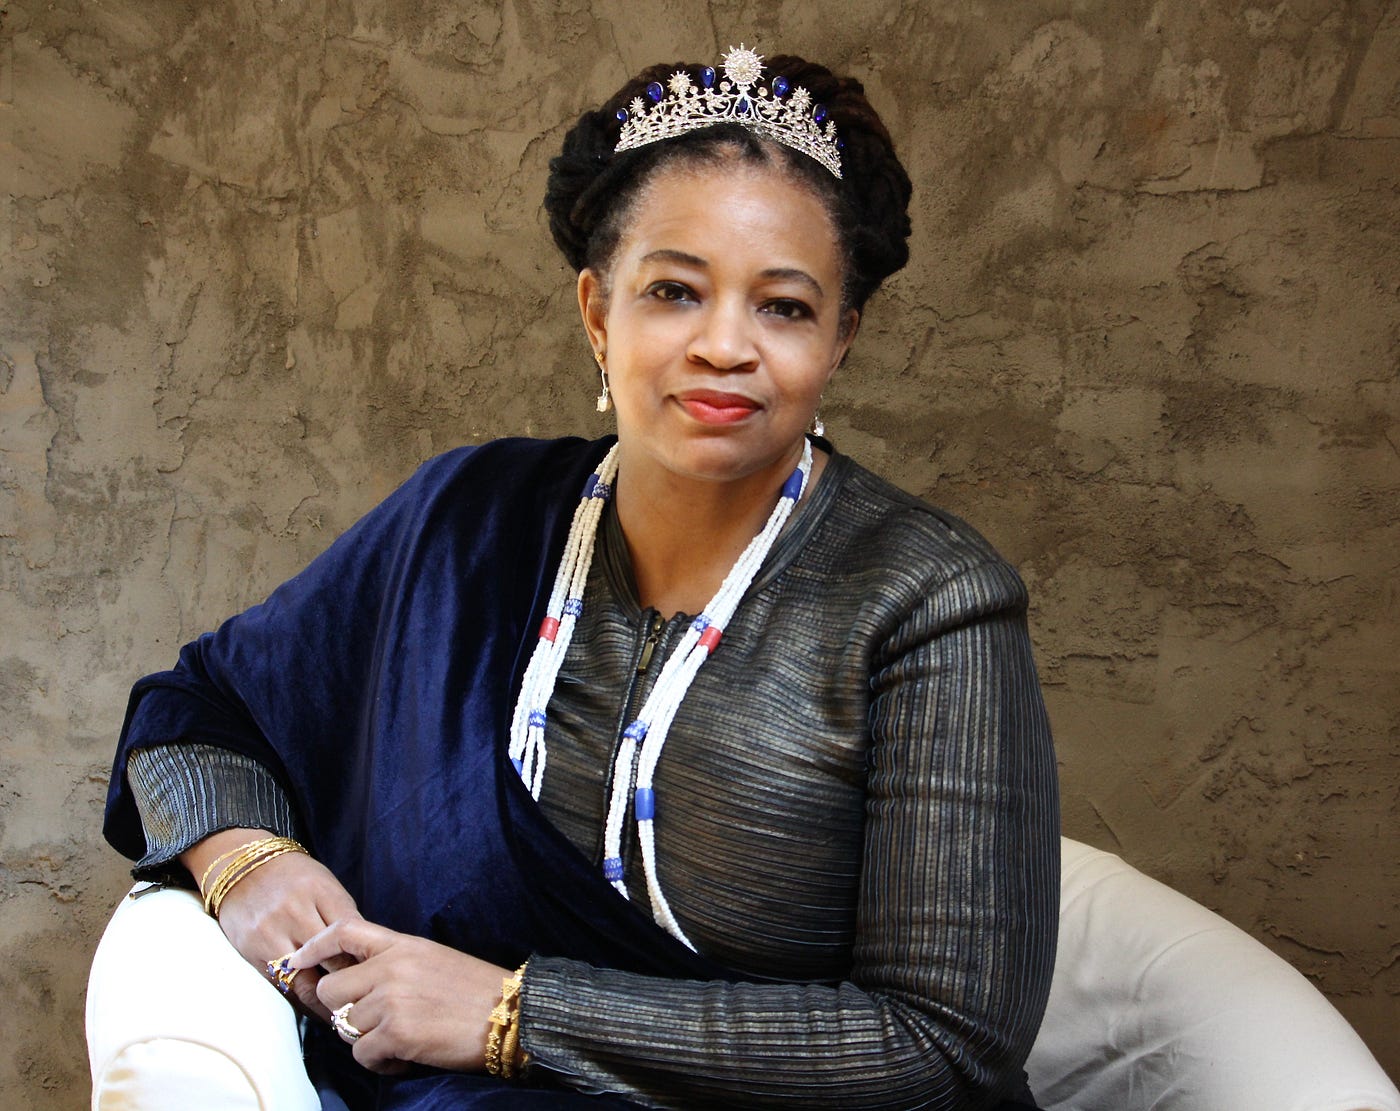 The Crown” goes to Ghana?: Media representation, global politics